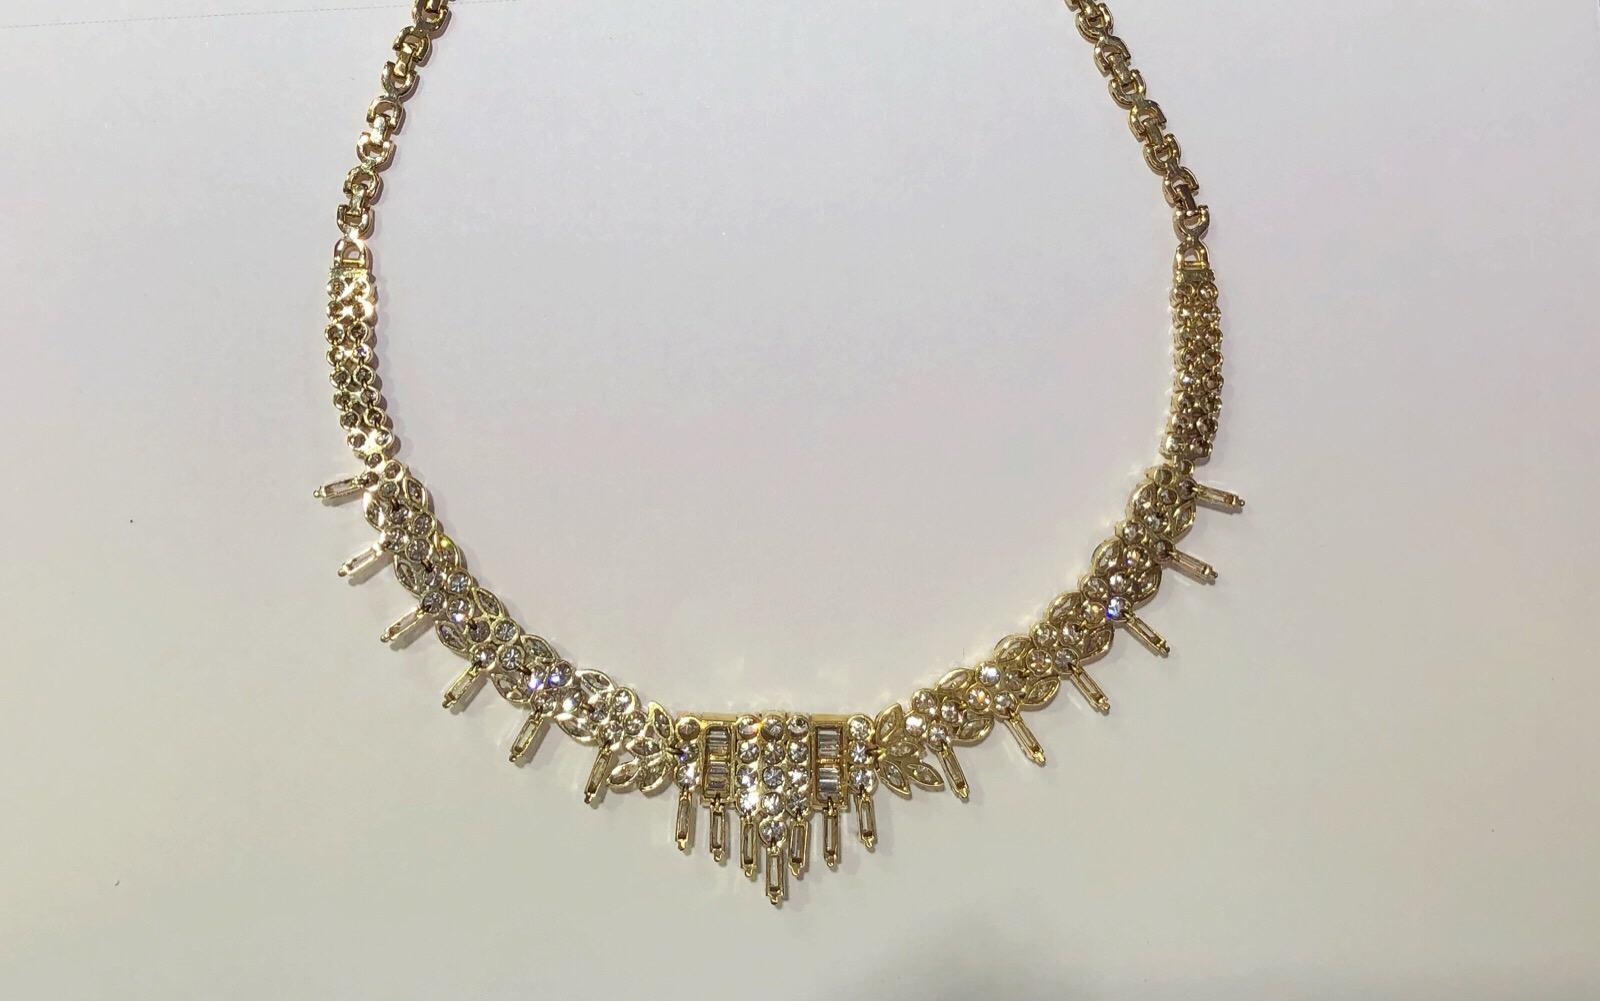 22 carat gold diamond necklace